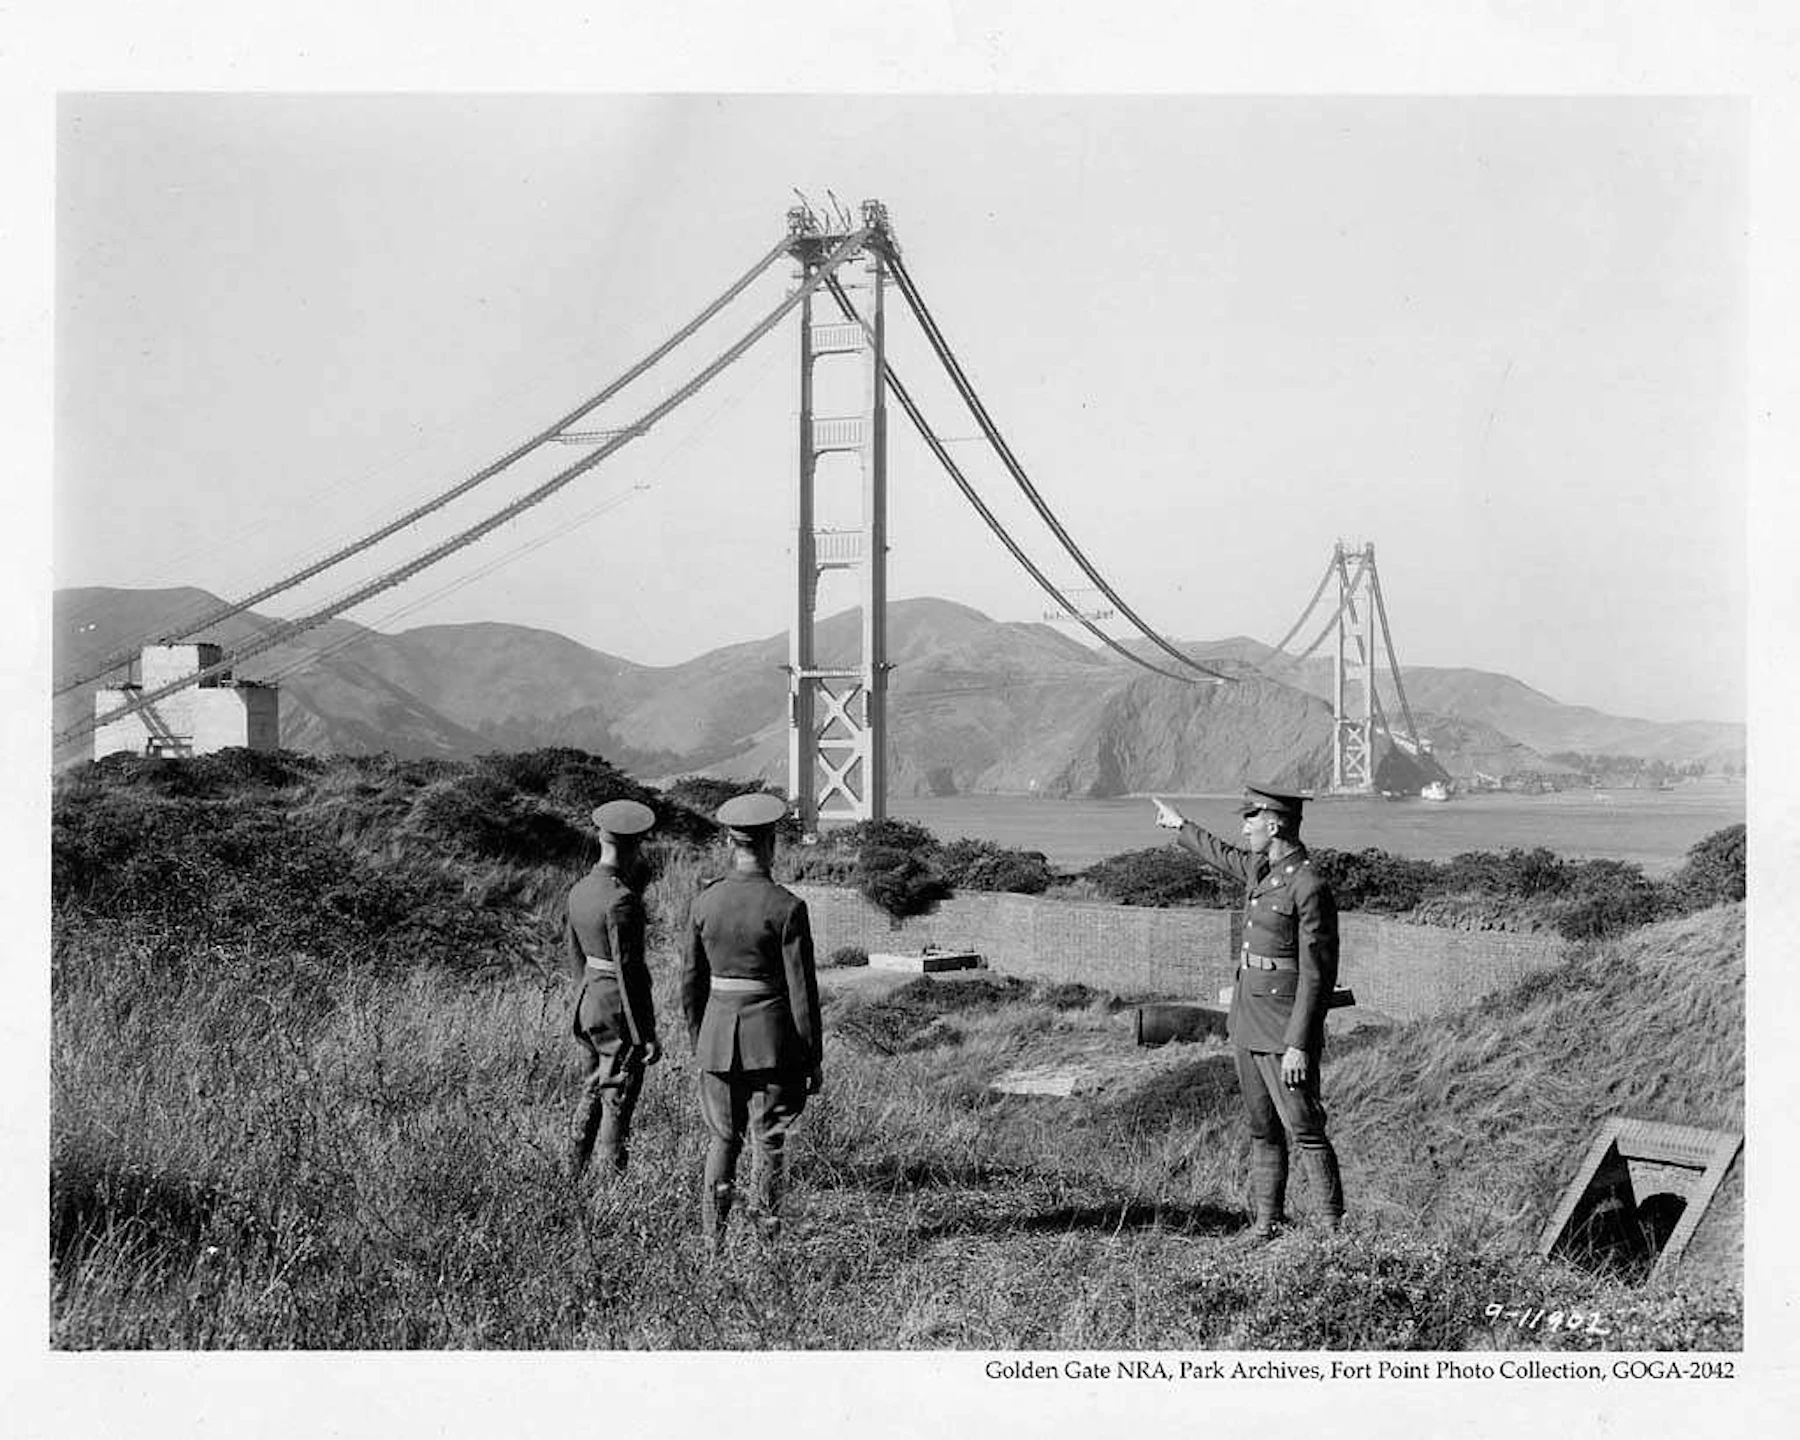 Unfinished Golden Gate Bridge